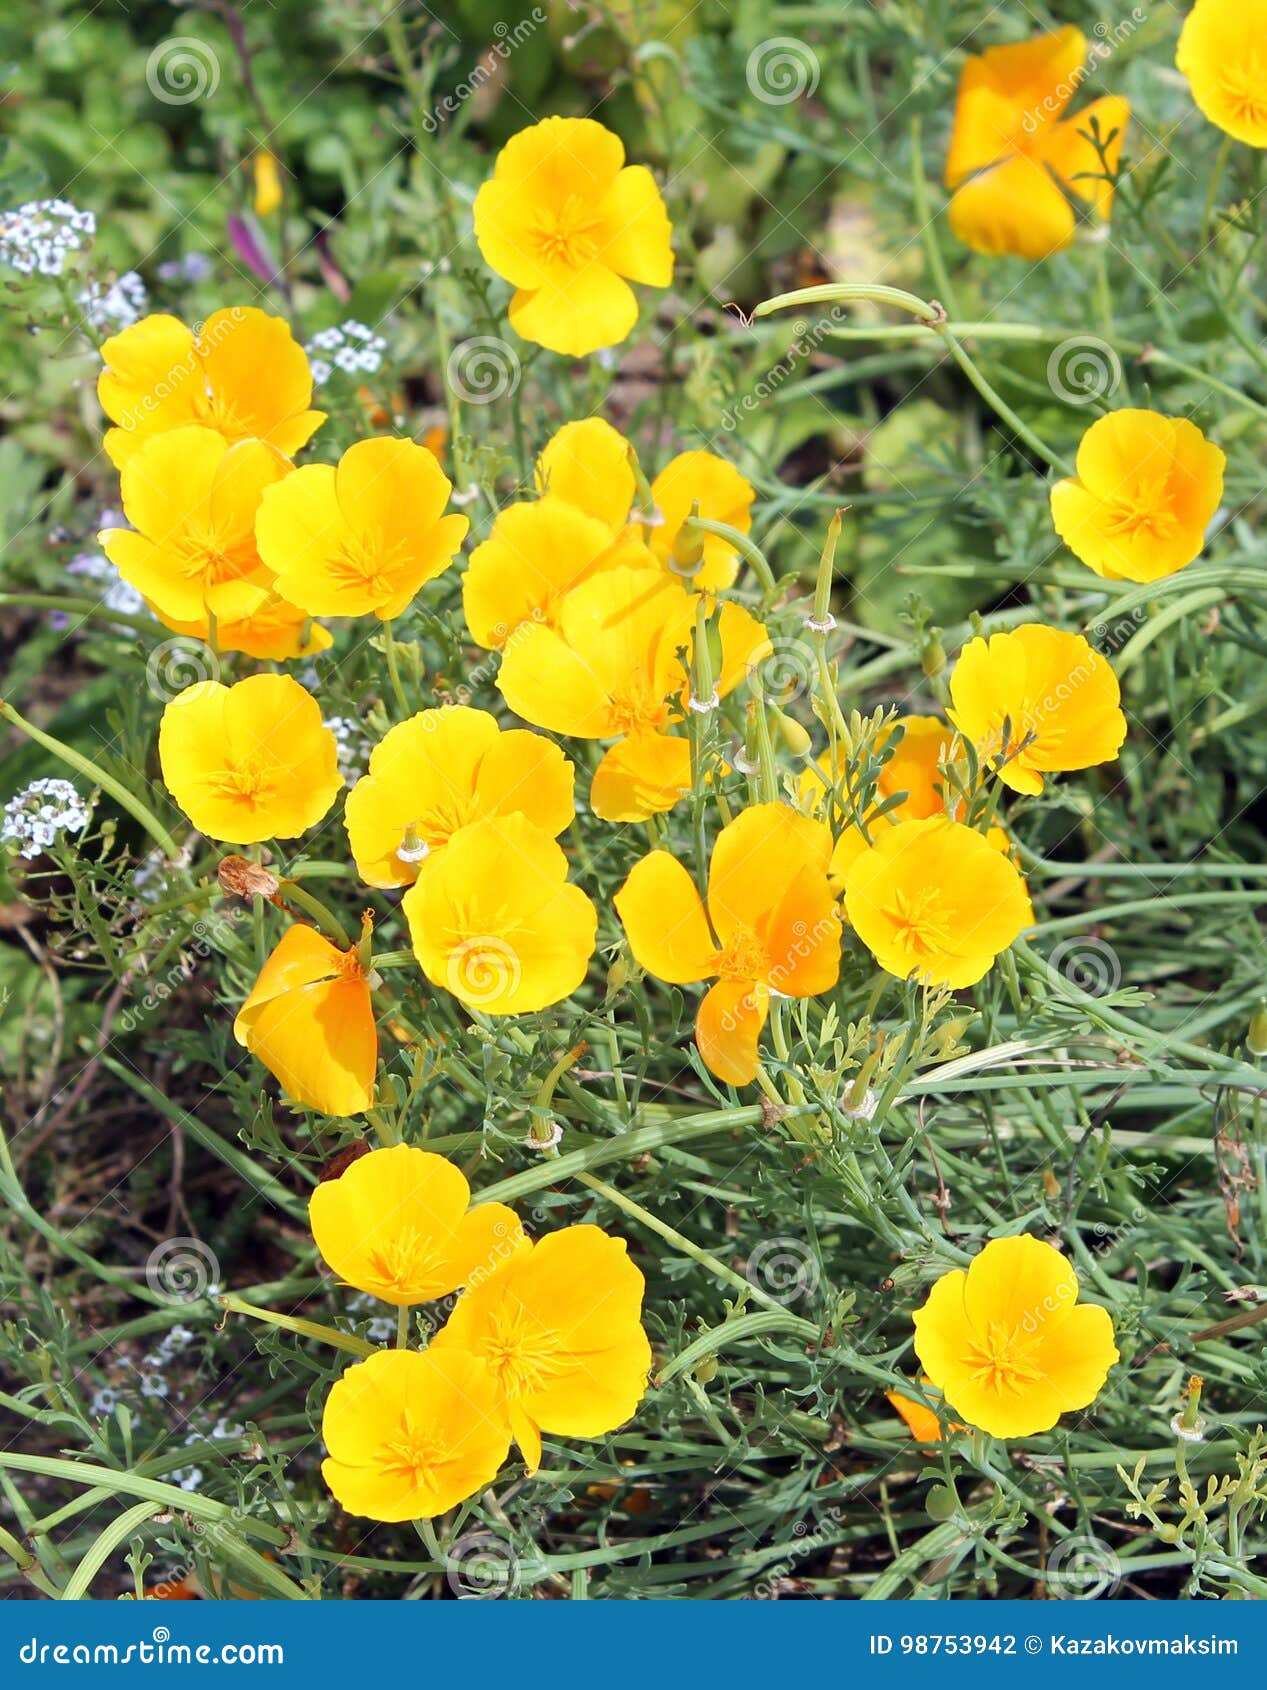 California Poppy or Eschscholzia californica yellow flowers on flowerbed